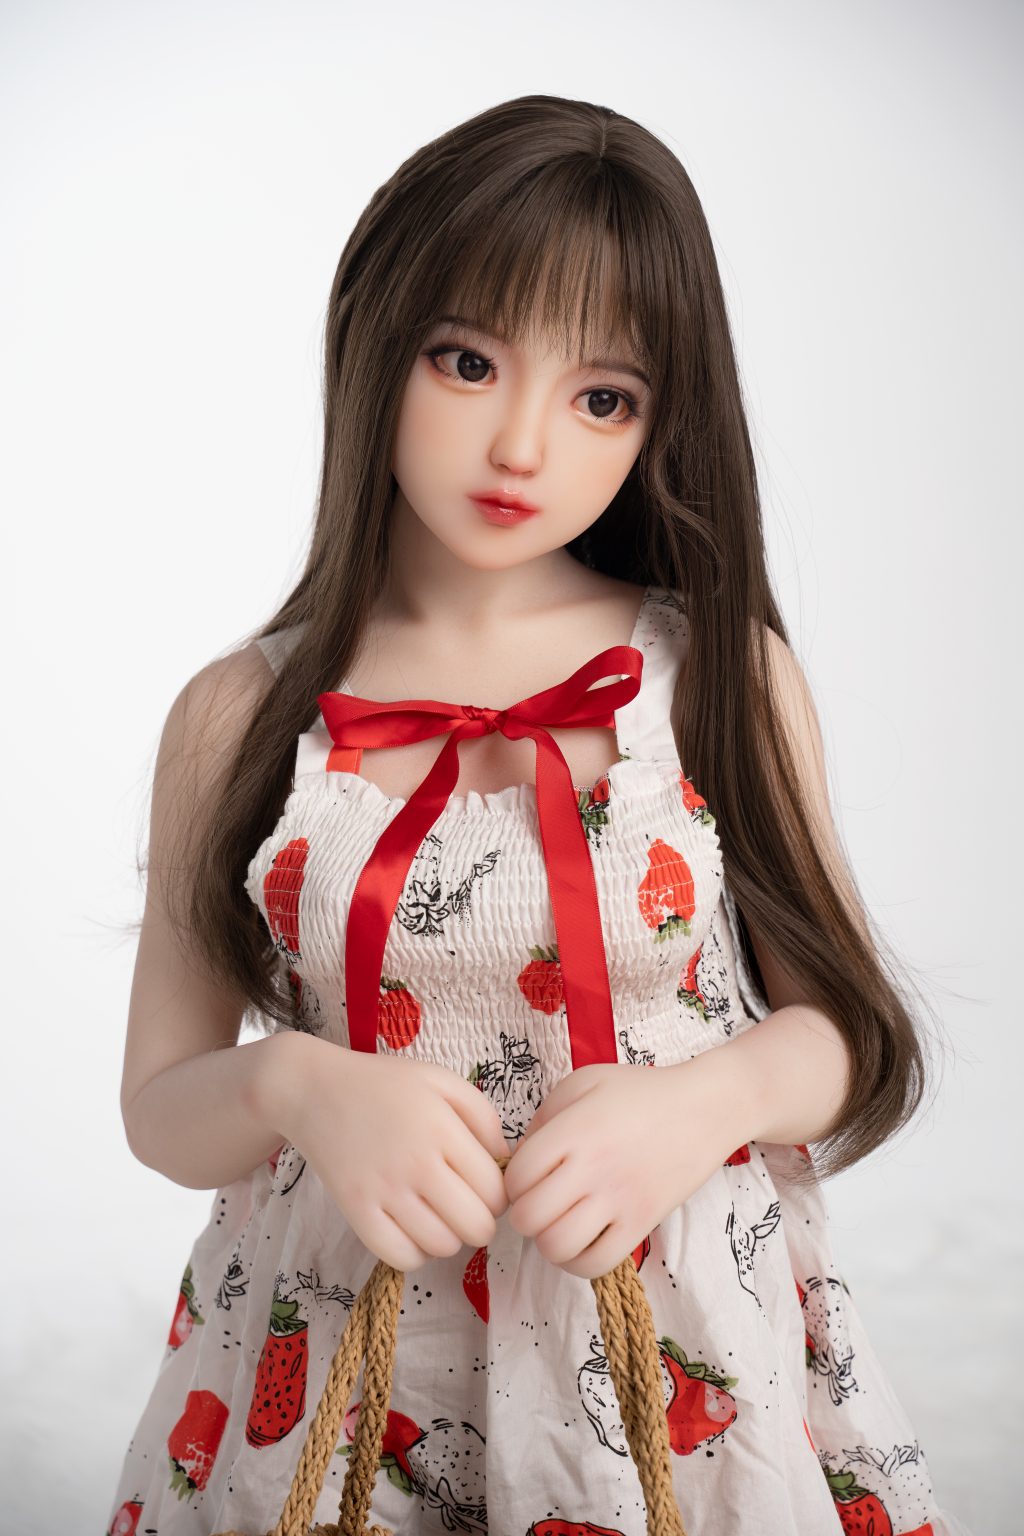 Dollter 130cm Annaisha Full TPE Doll With Realistic Makeup.